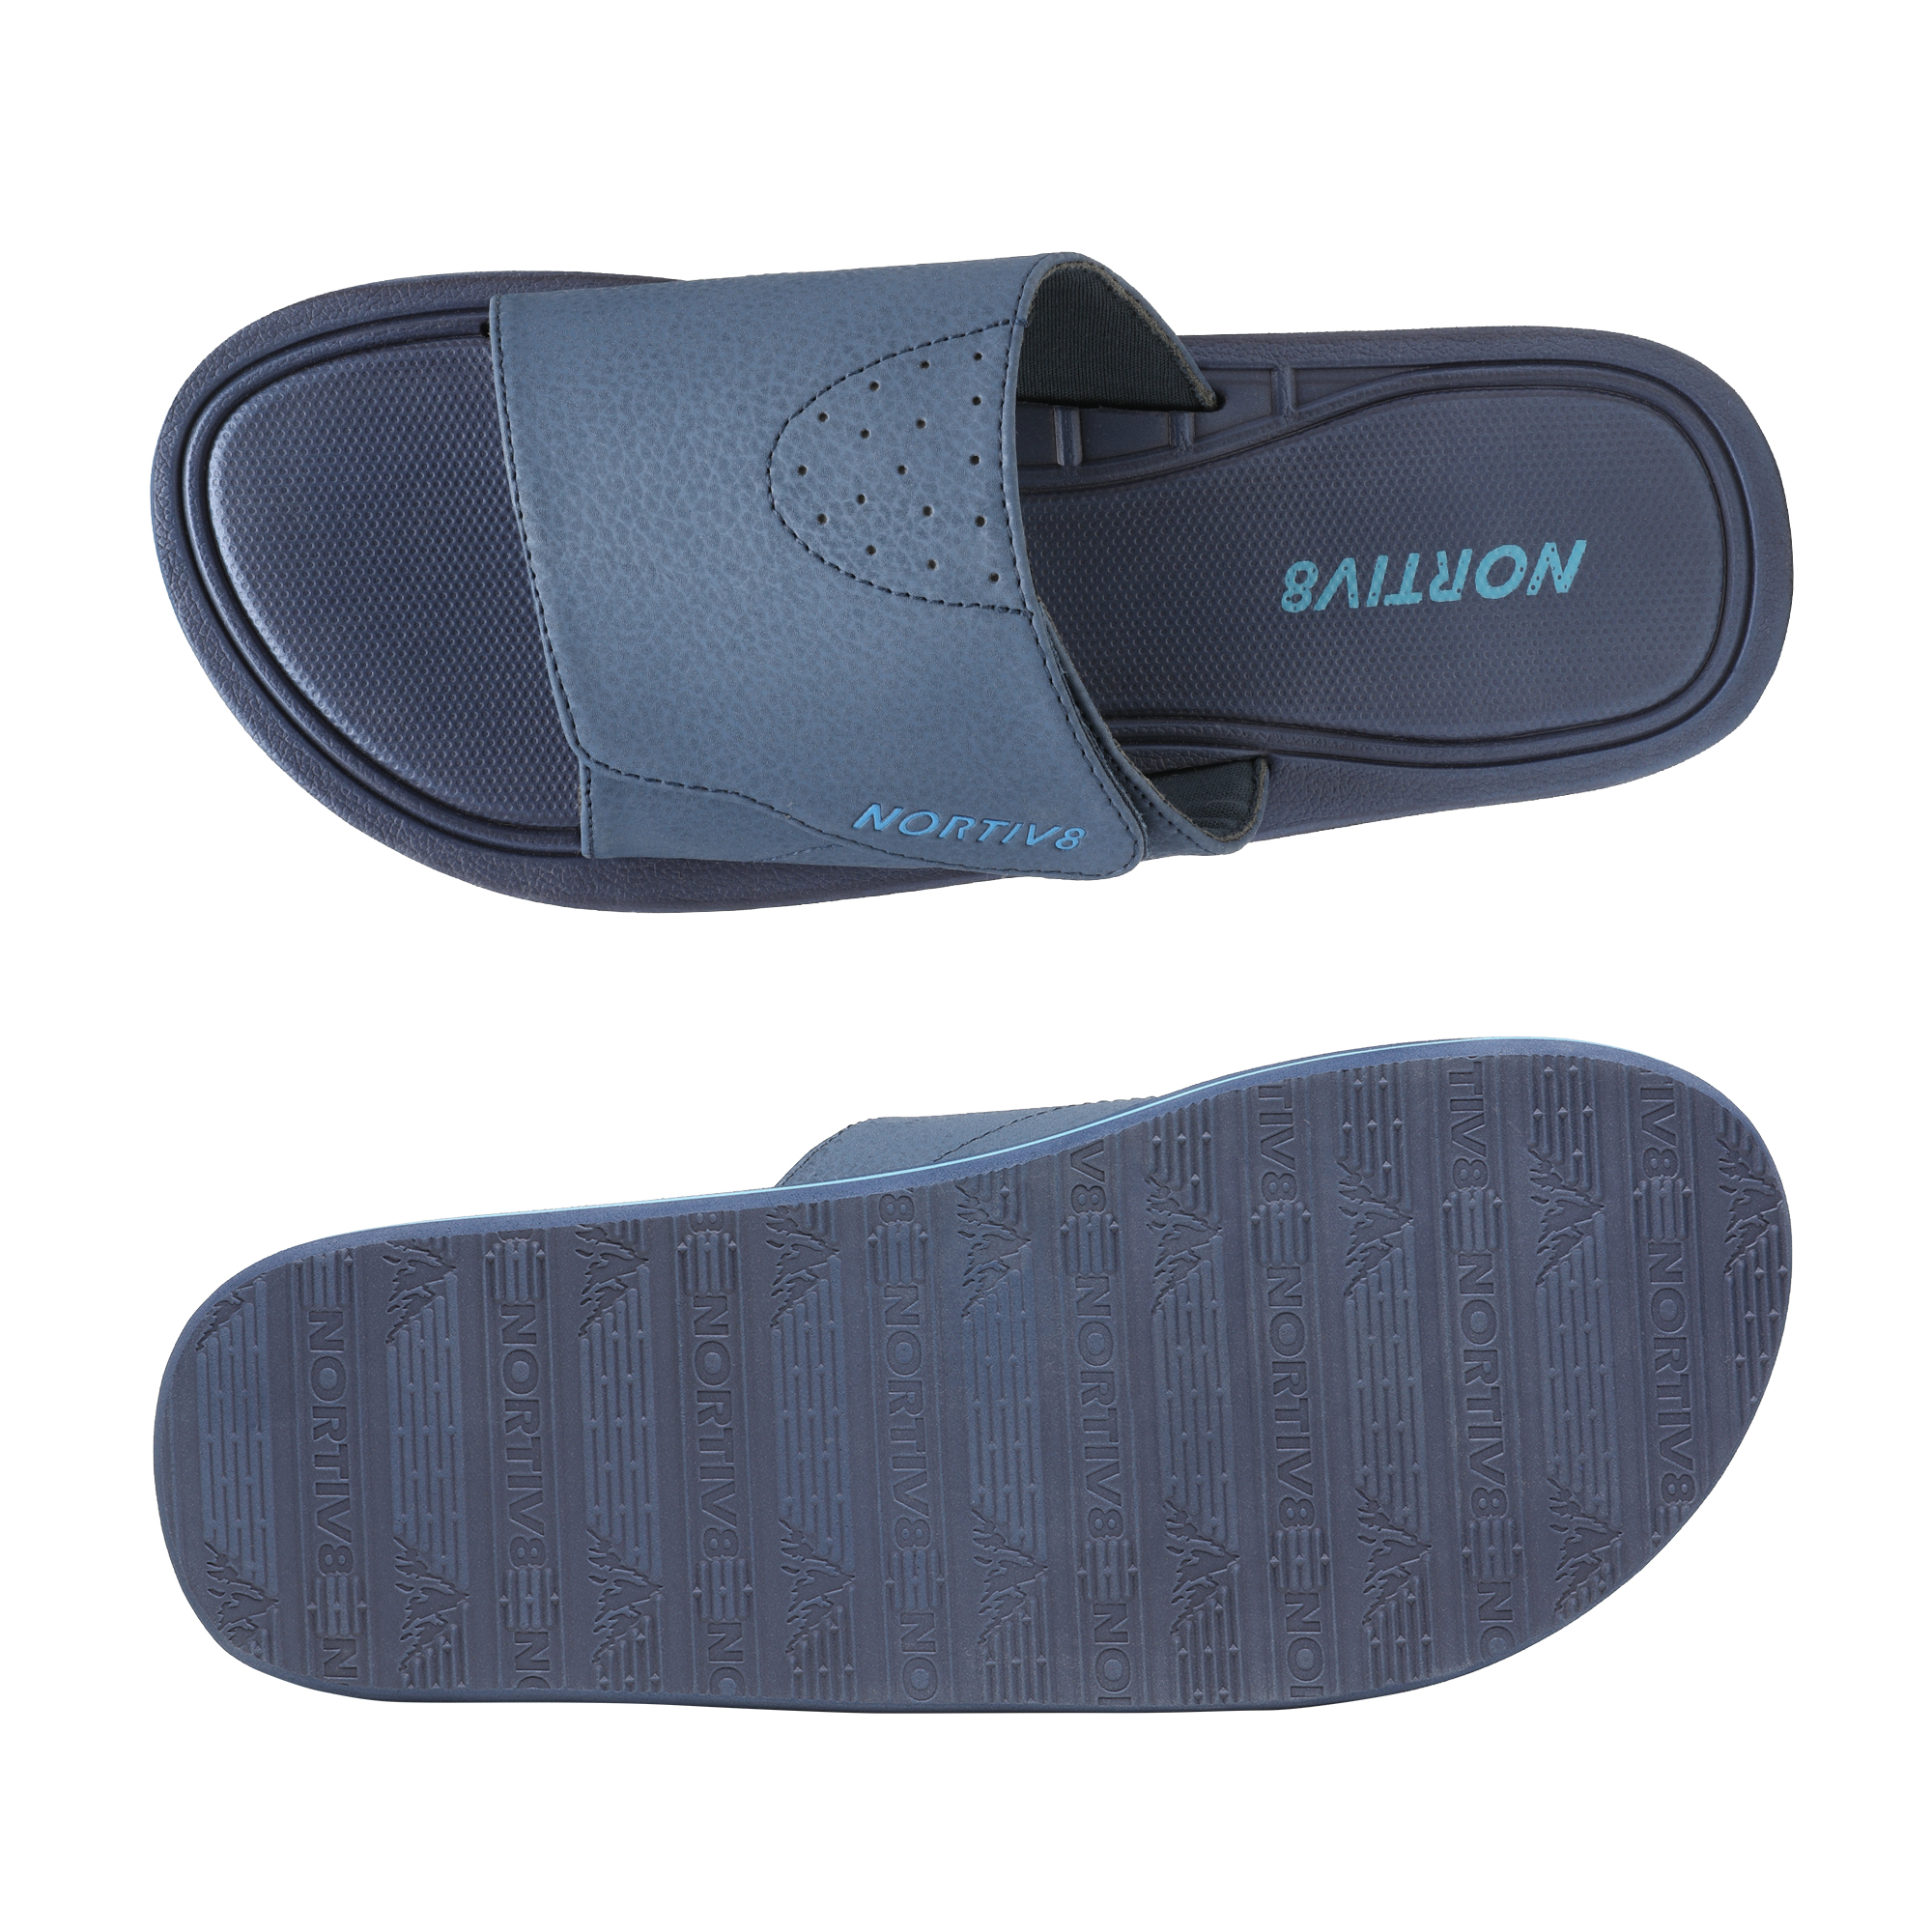 Nortiv8 Men's Memory Foam Adjustable Slide Sandals Comfort Lightweight Summer Beach Sandals Shoes FUSION NAVY Size 15 - image 3 of 5